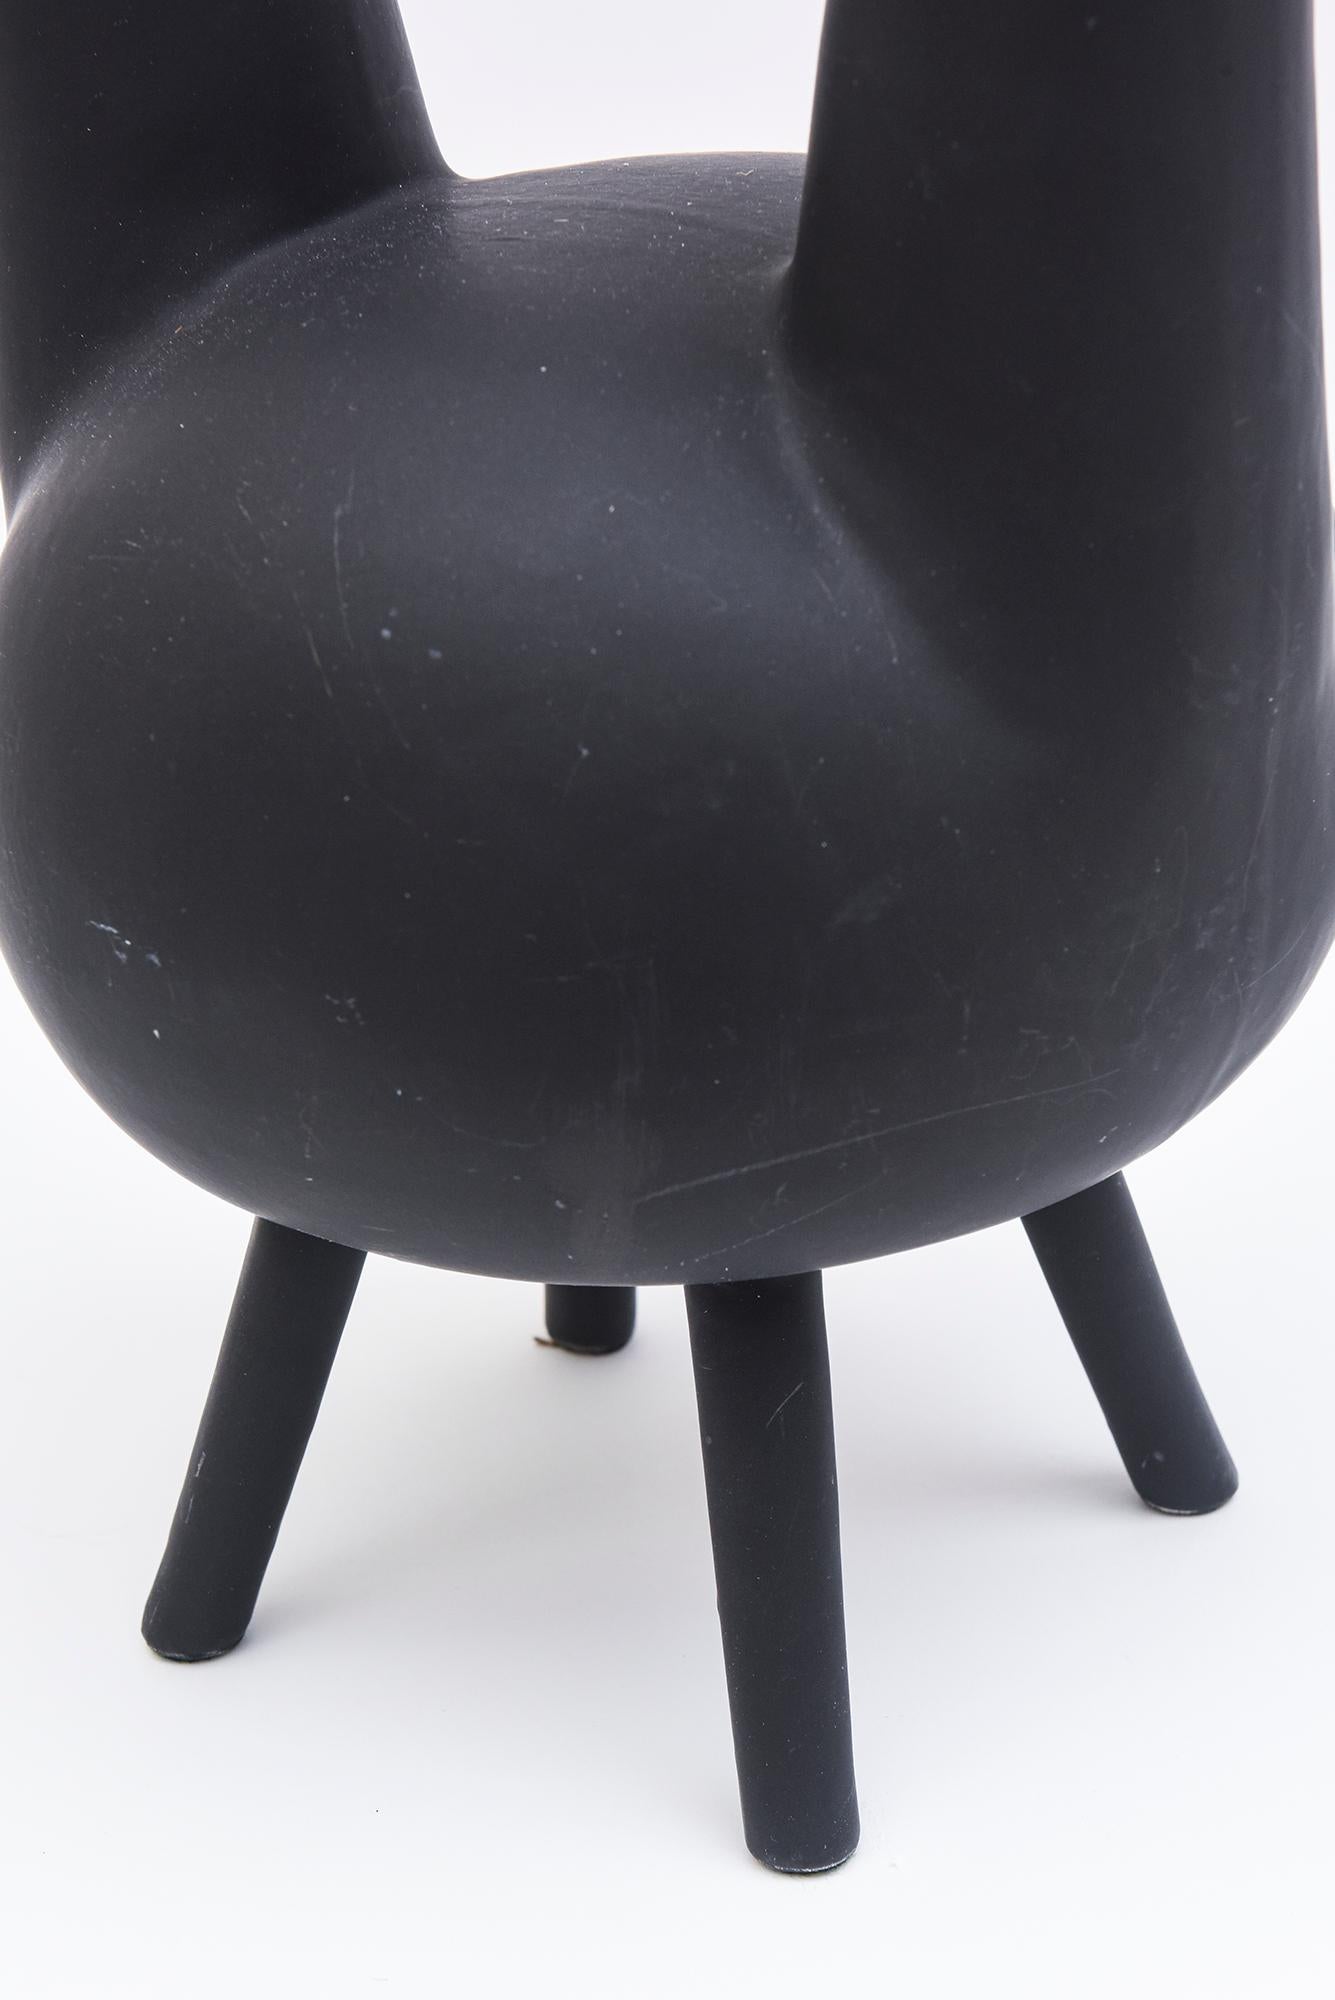  Pampaloni Gio Ponti Design Black Matt Ceramic Abstract Vessel Sculpture Italian 3